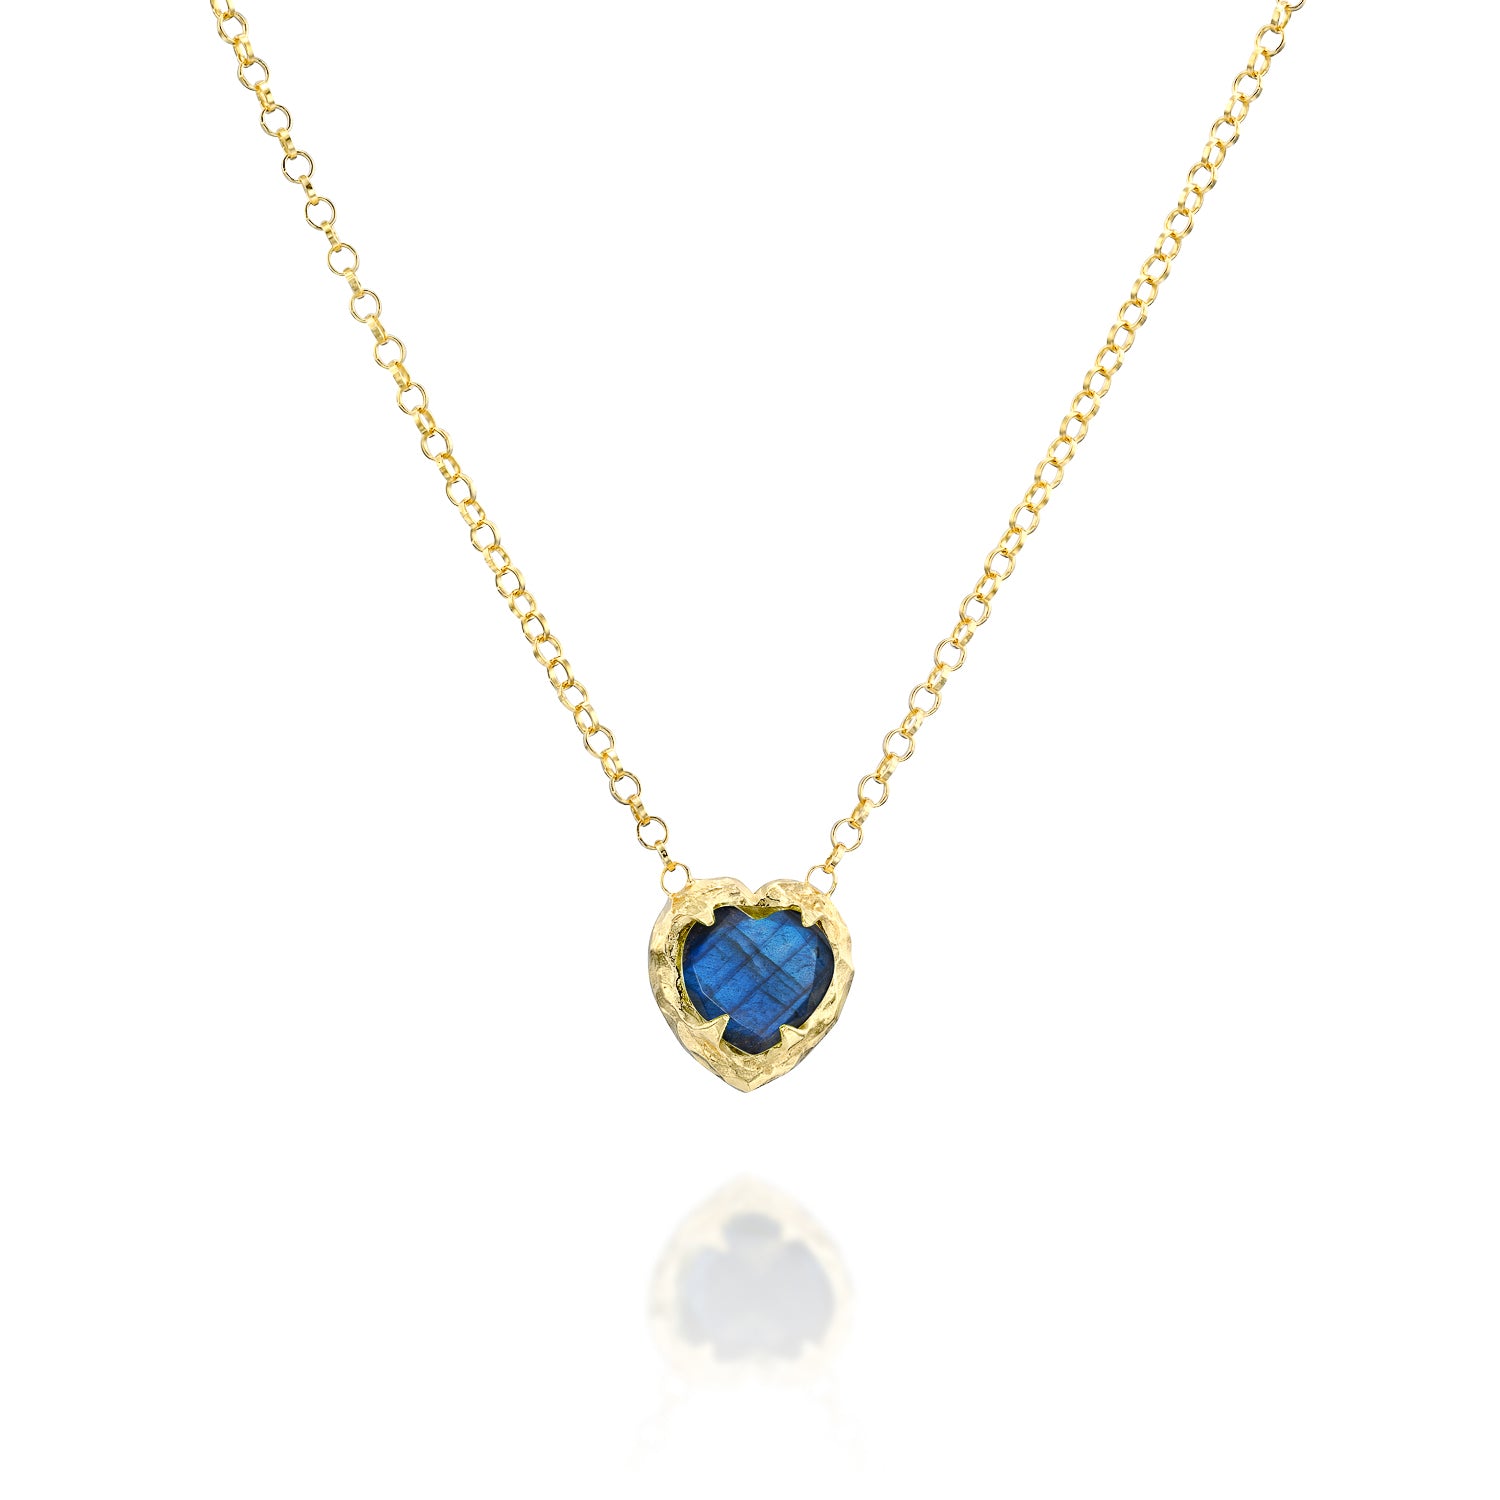 Baby Inanna Necklace & Labradorite - Danielle Gerber Freedom Jewelry